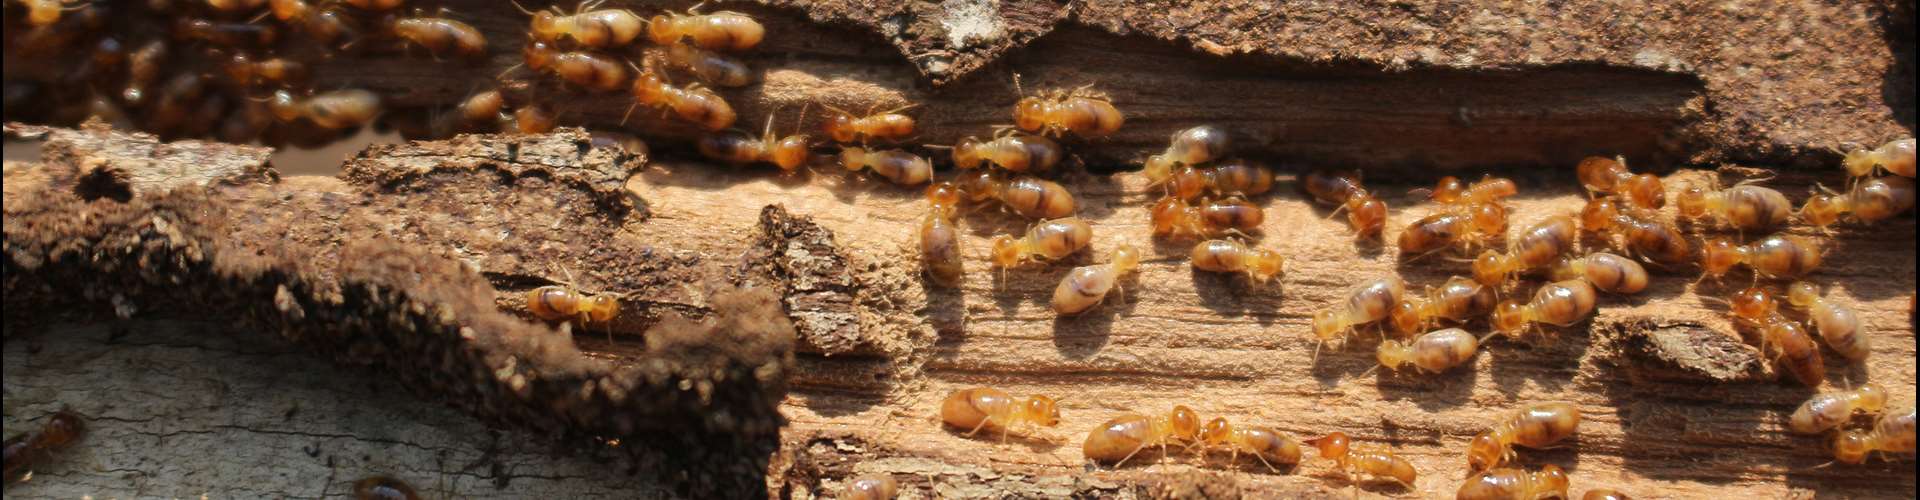 Jpmchale Termites 2X